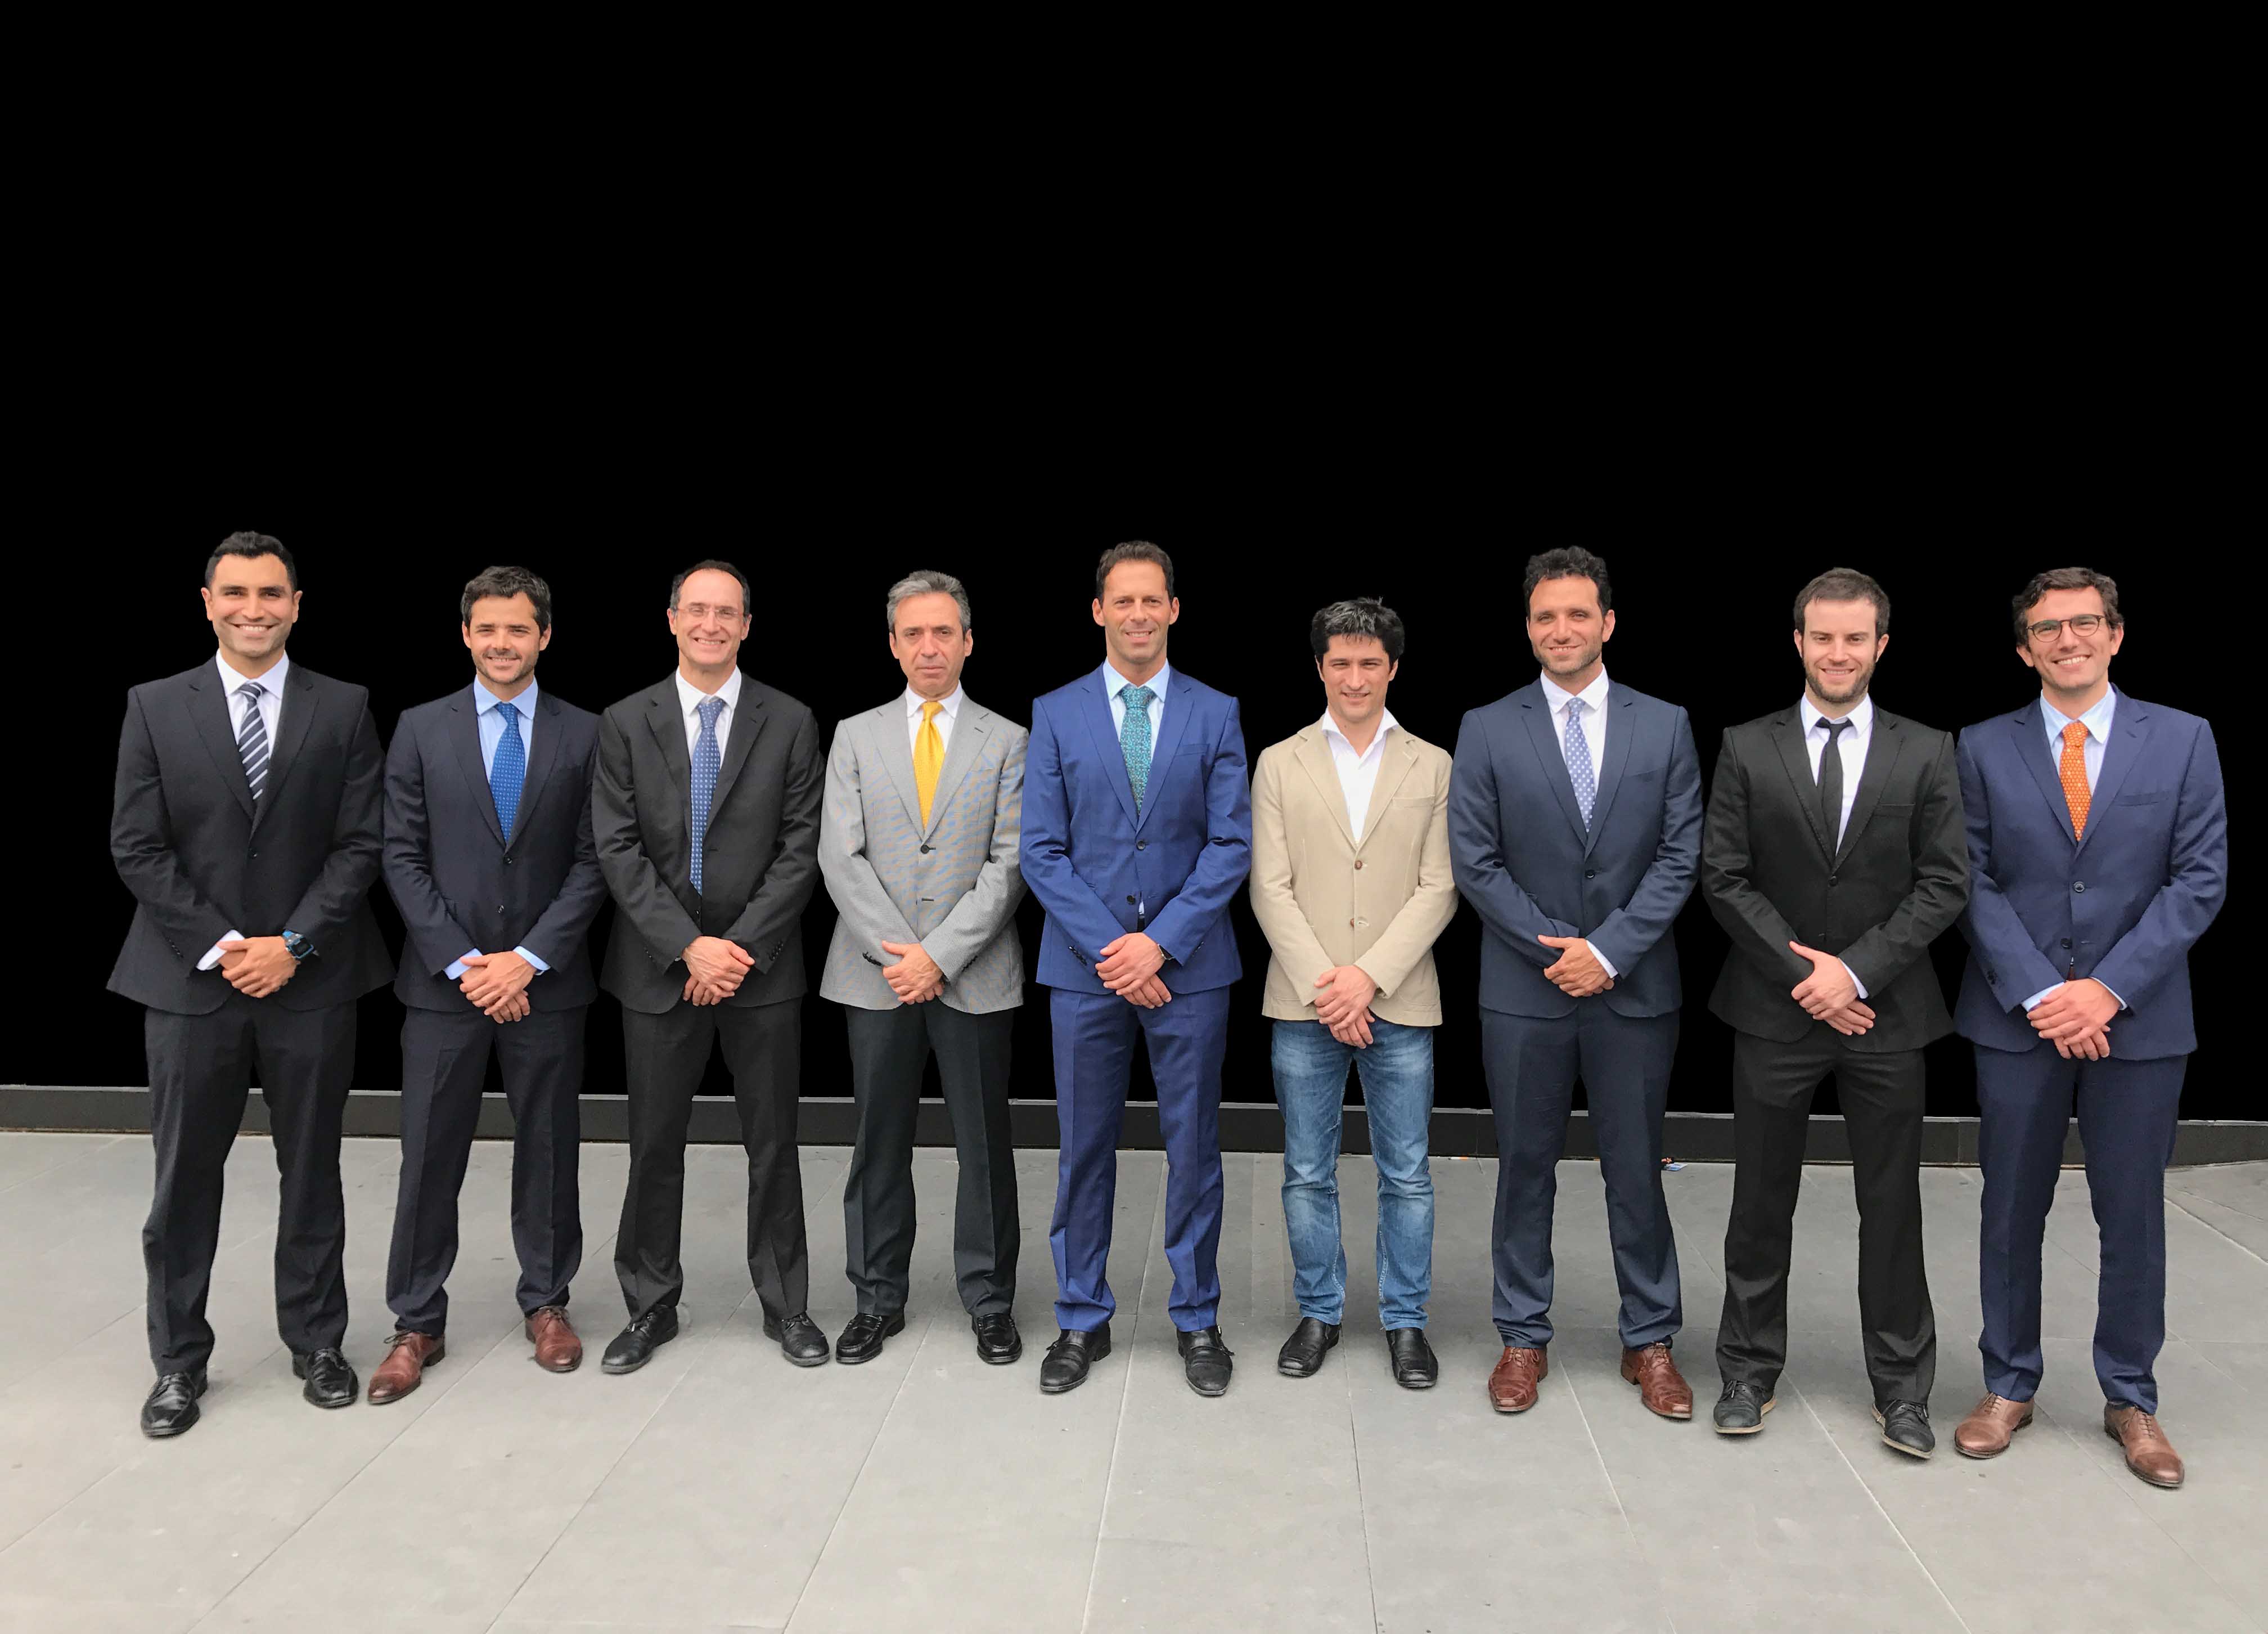 De izquierda a derecha: Federico Ibáñez, Juan Erquicia, Xavier Pelfort, Joan Carles Monllau, Pablo Gelber, Raúl Torres, Maximiliano Ibáñez, Àngel Masferrer y Daniel Pérez Prieto.